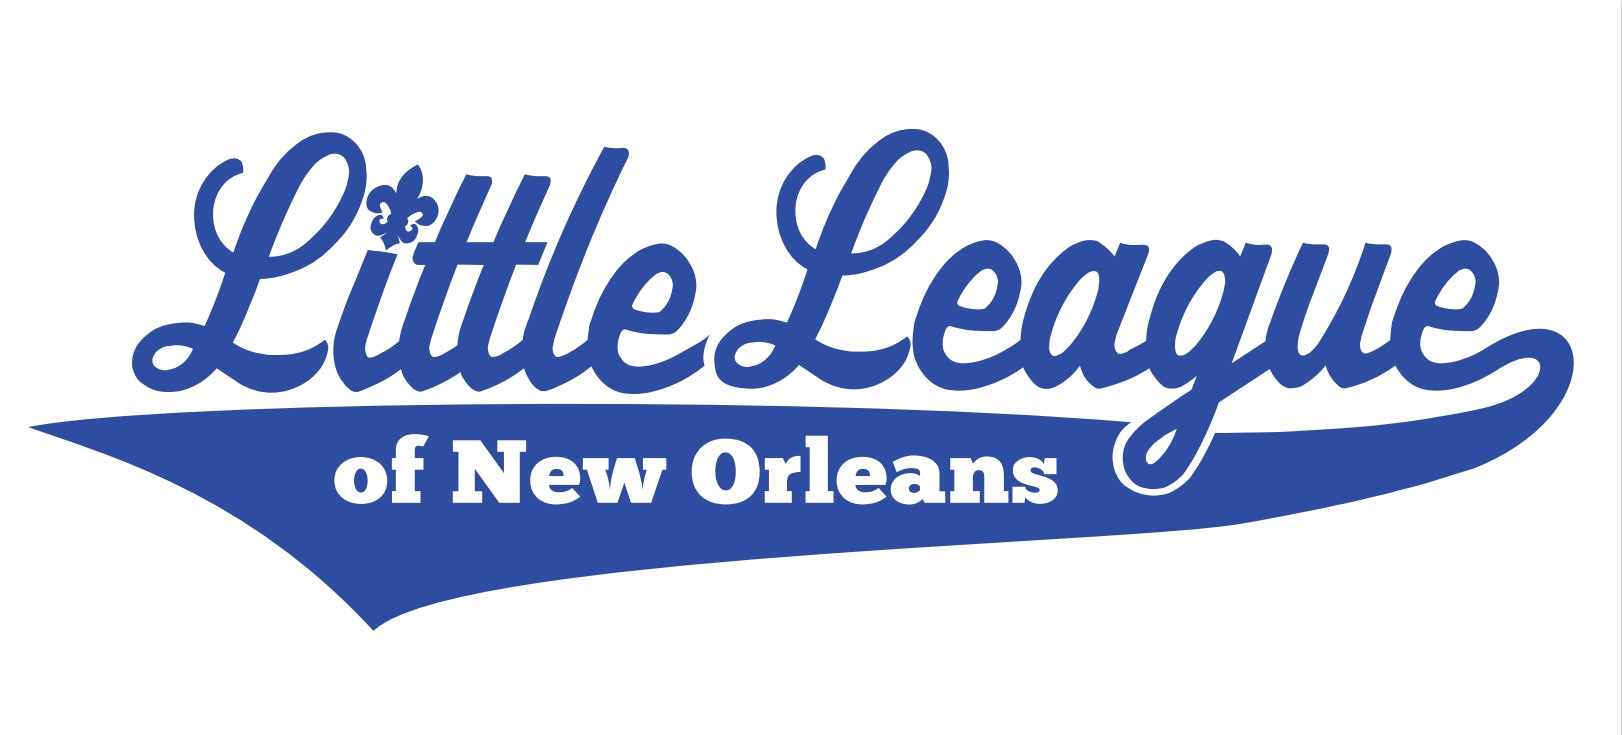 Little League of New Orleans